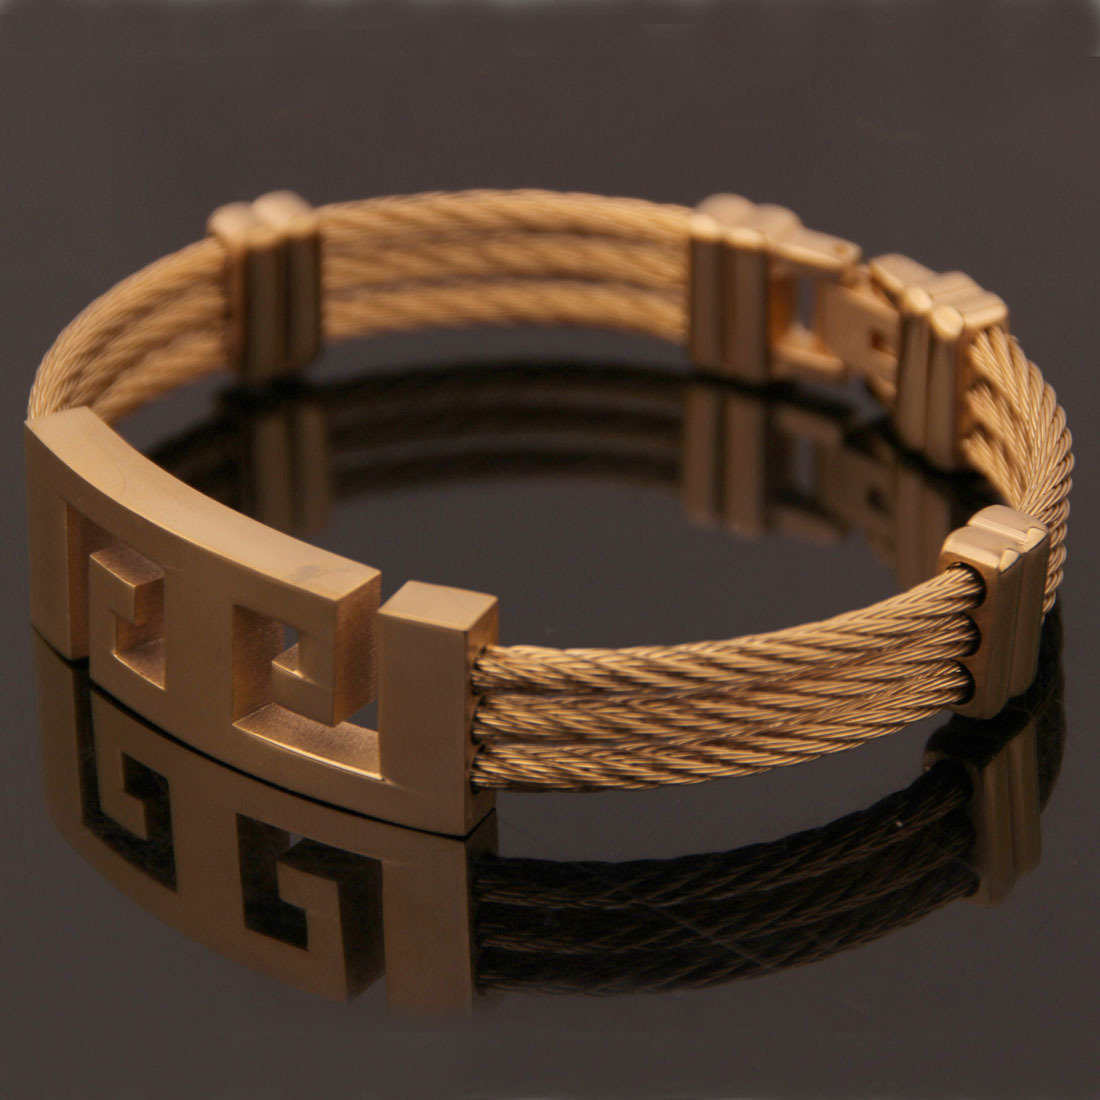 3192235813 1402633683 - Three-ring wire braided hemp rope bracelet